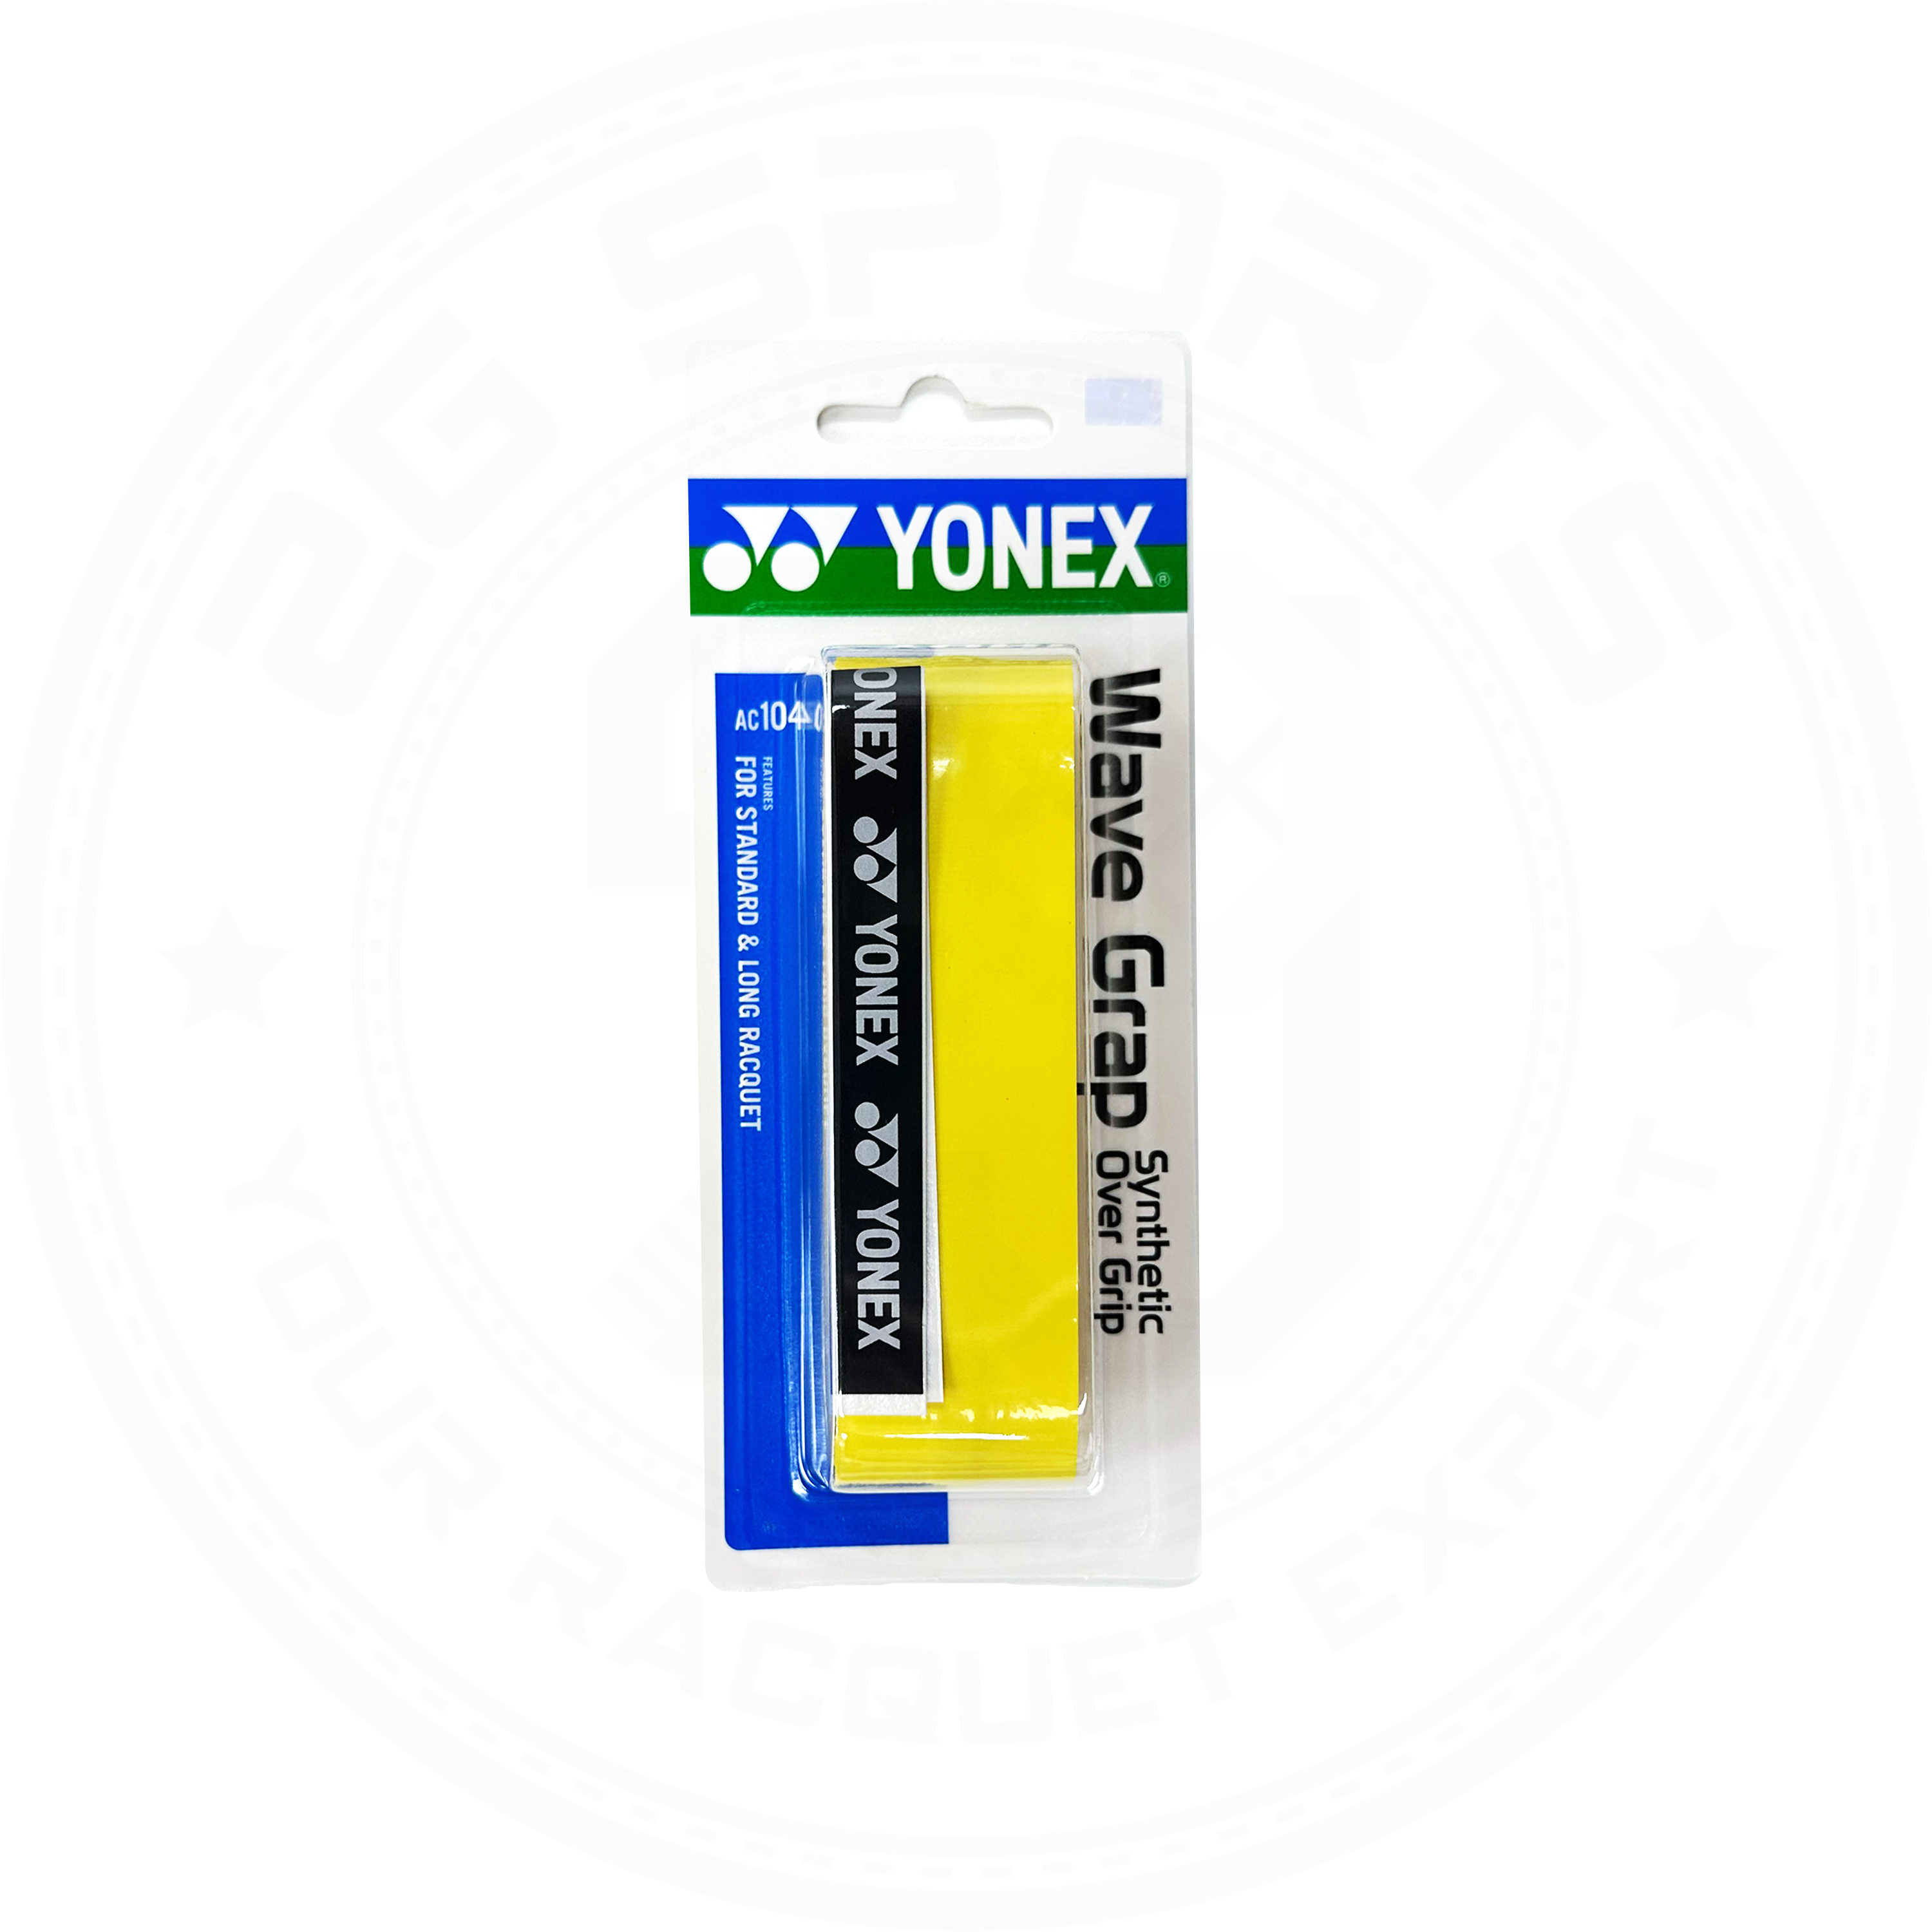 Yonex AC104EX Wave Grap (1 wrap)